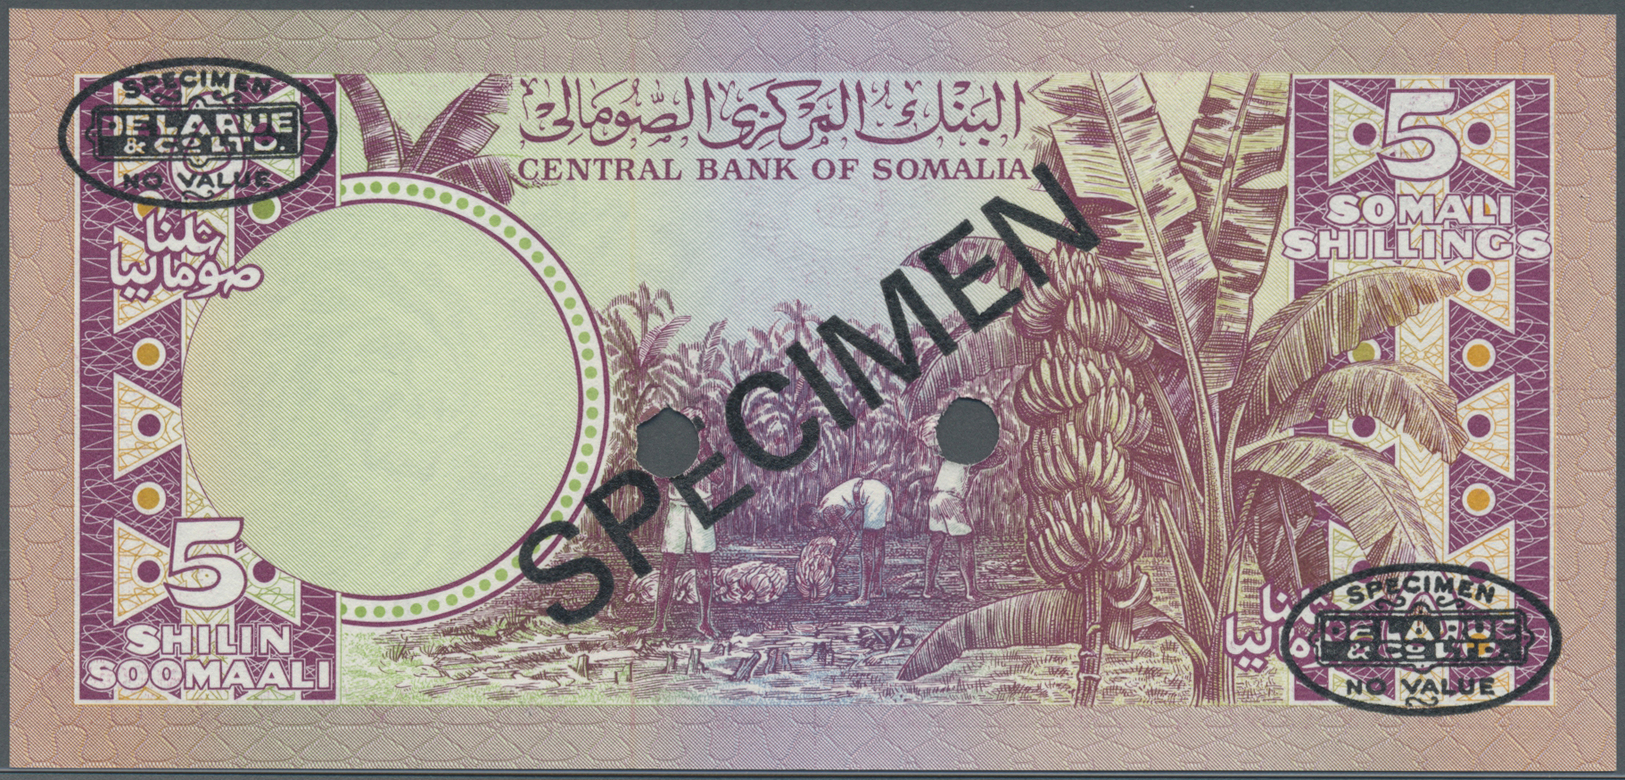 02931 Somalia: 5 Shillings 1978 Specimen P. 21s In Condition: UNC. - Somalie